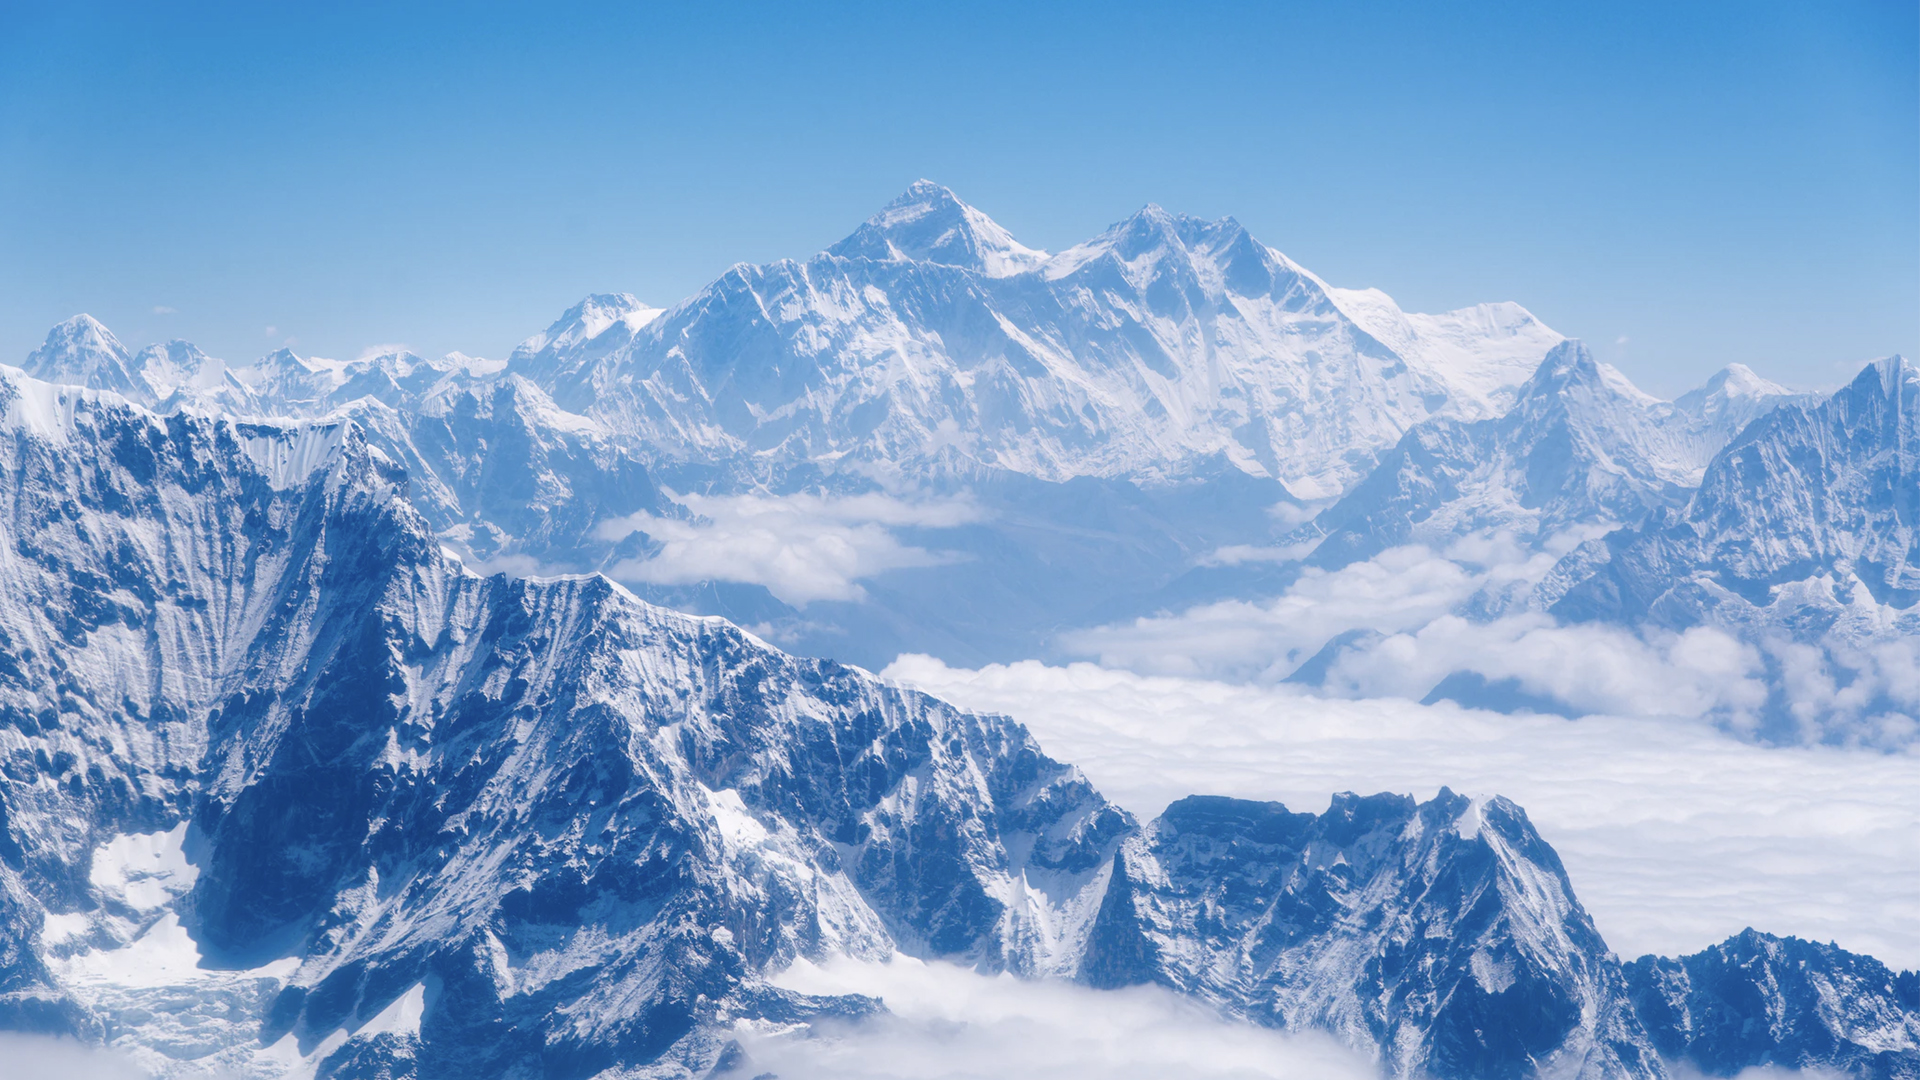 K2, Mount Everest